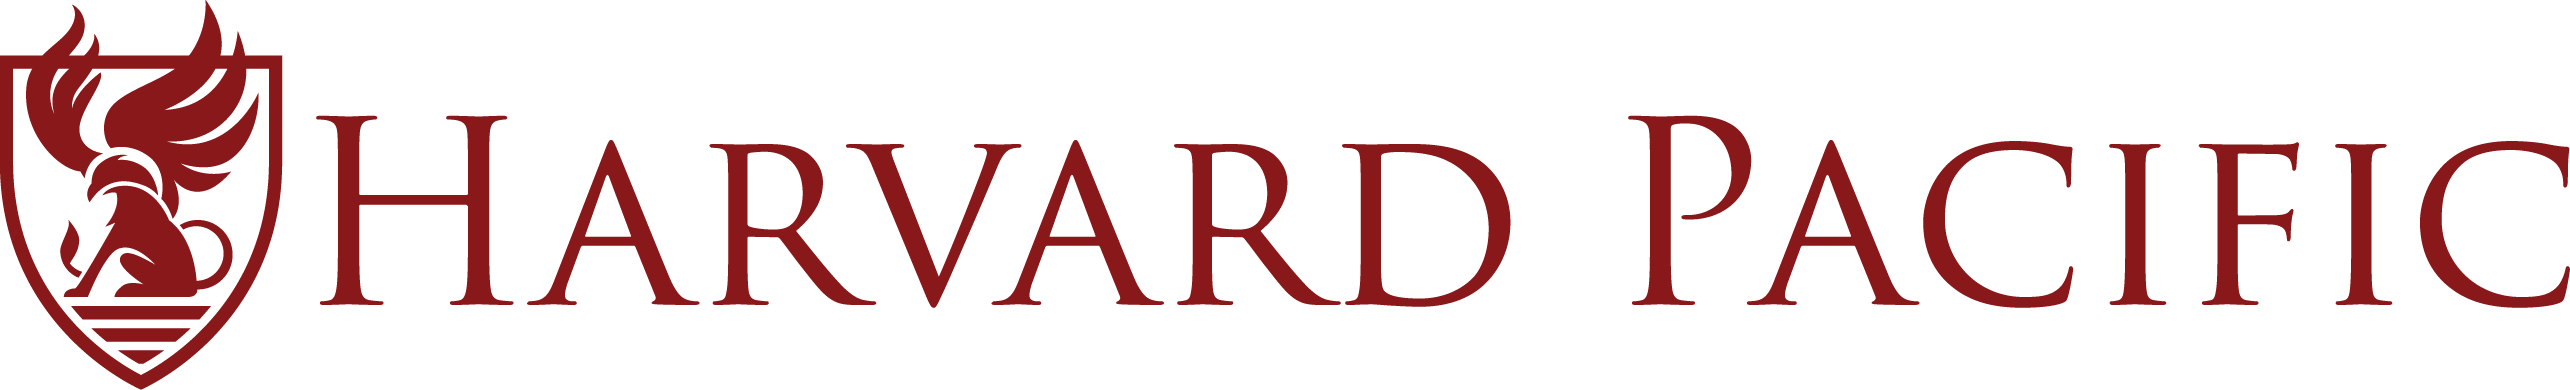 HarvardPacific logo